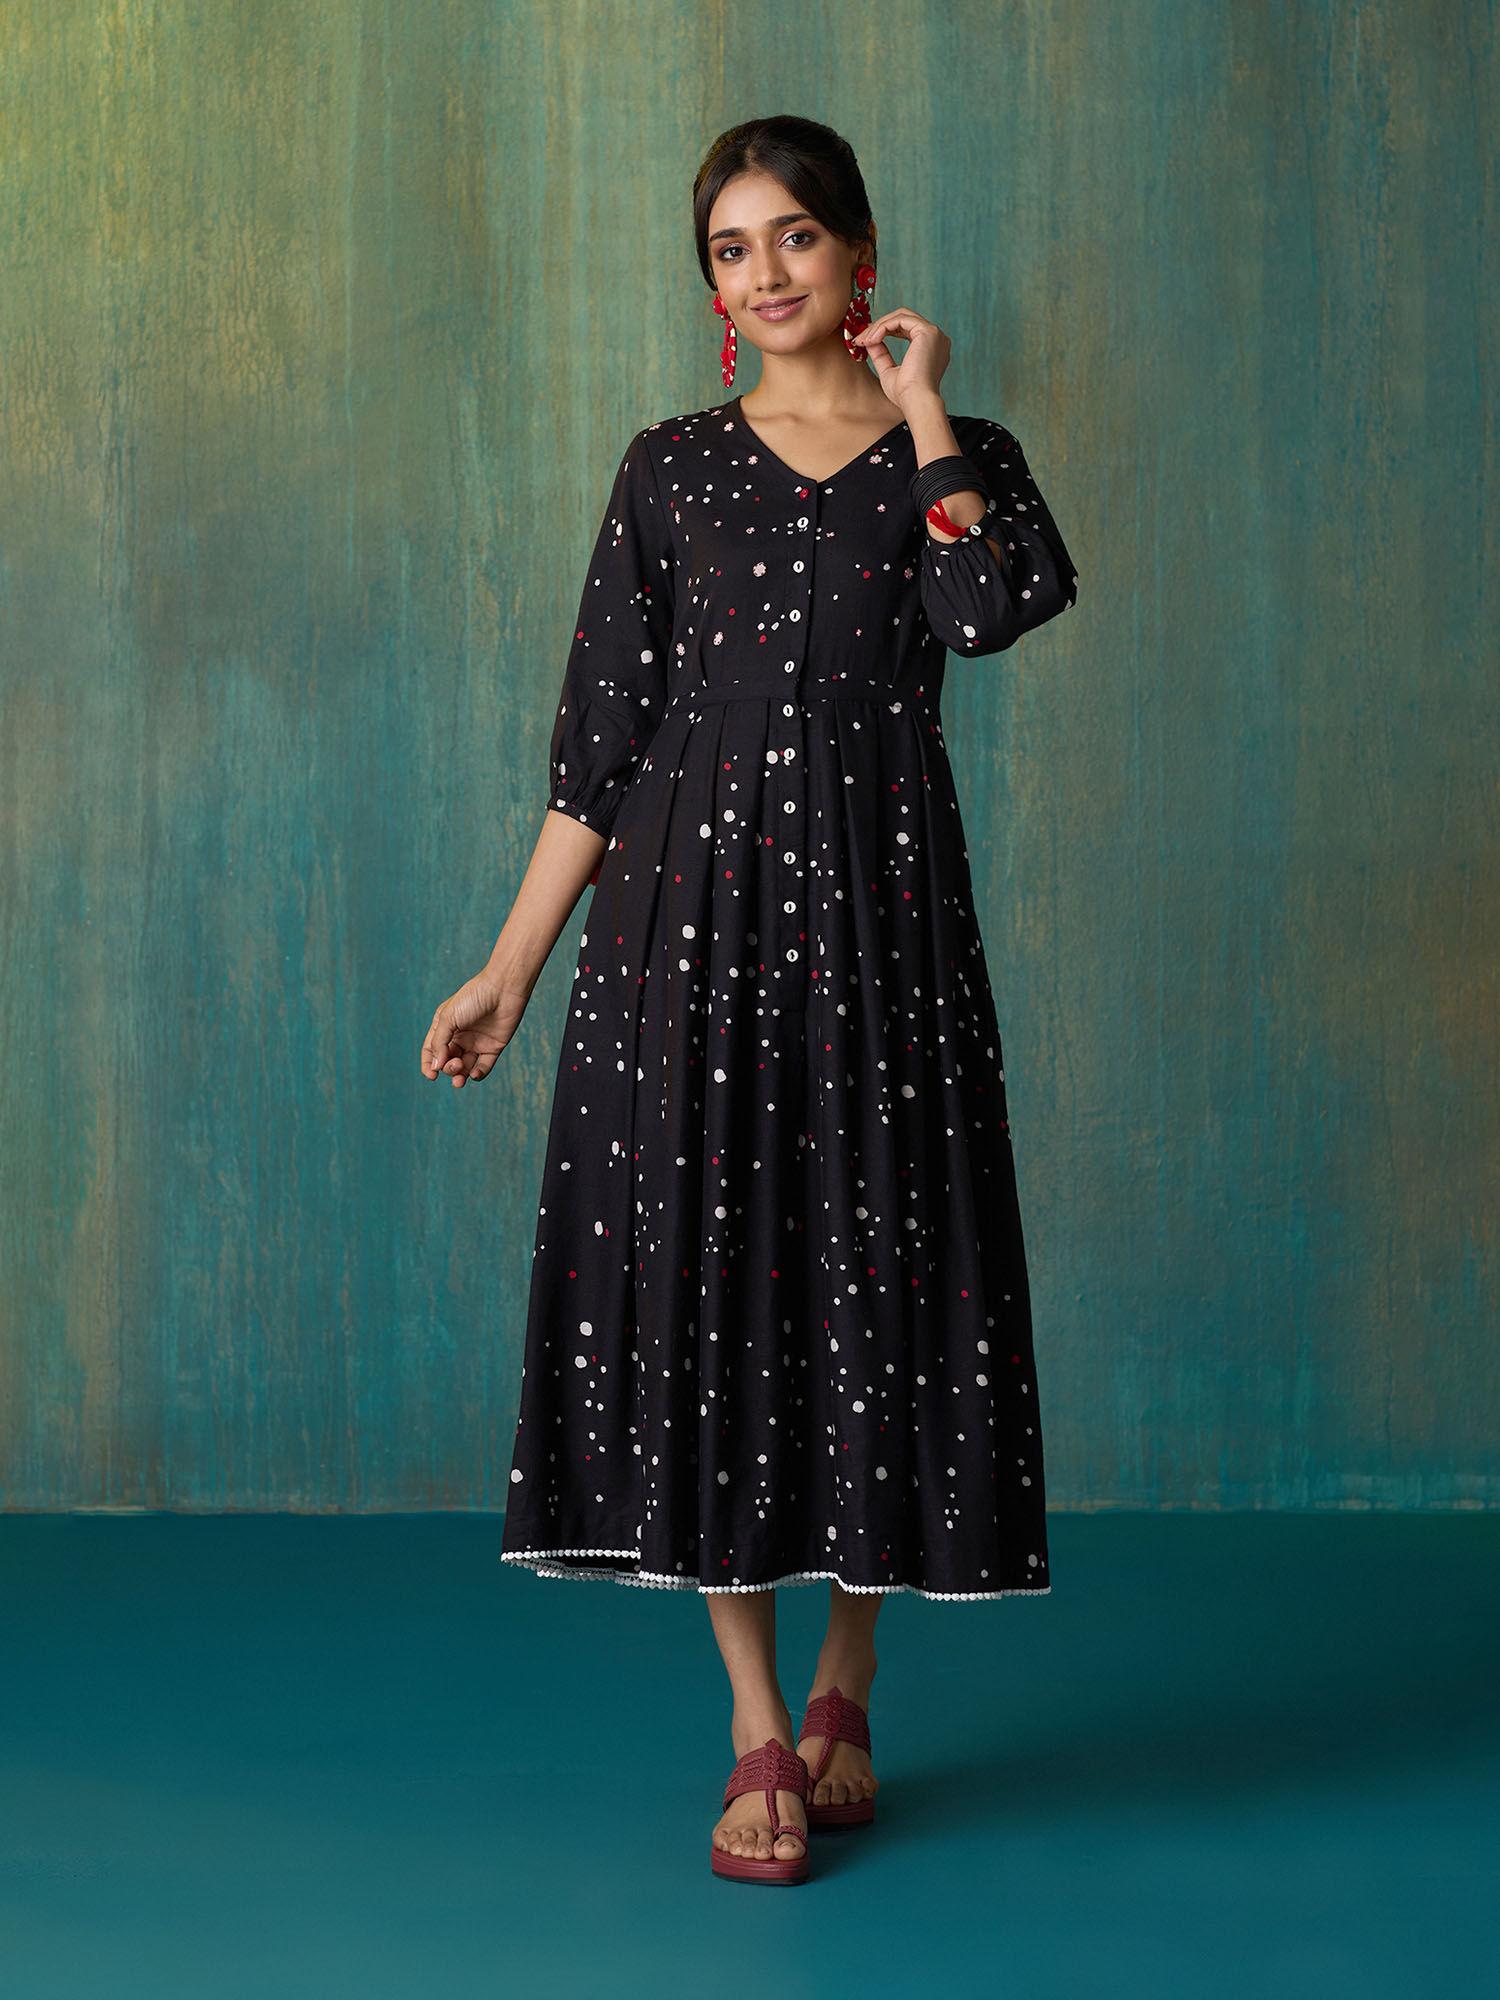 black polka dot printed cotton flex dress likdrs70